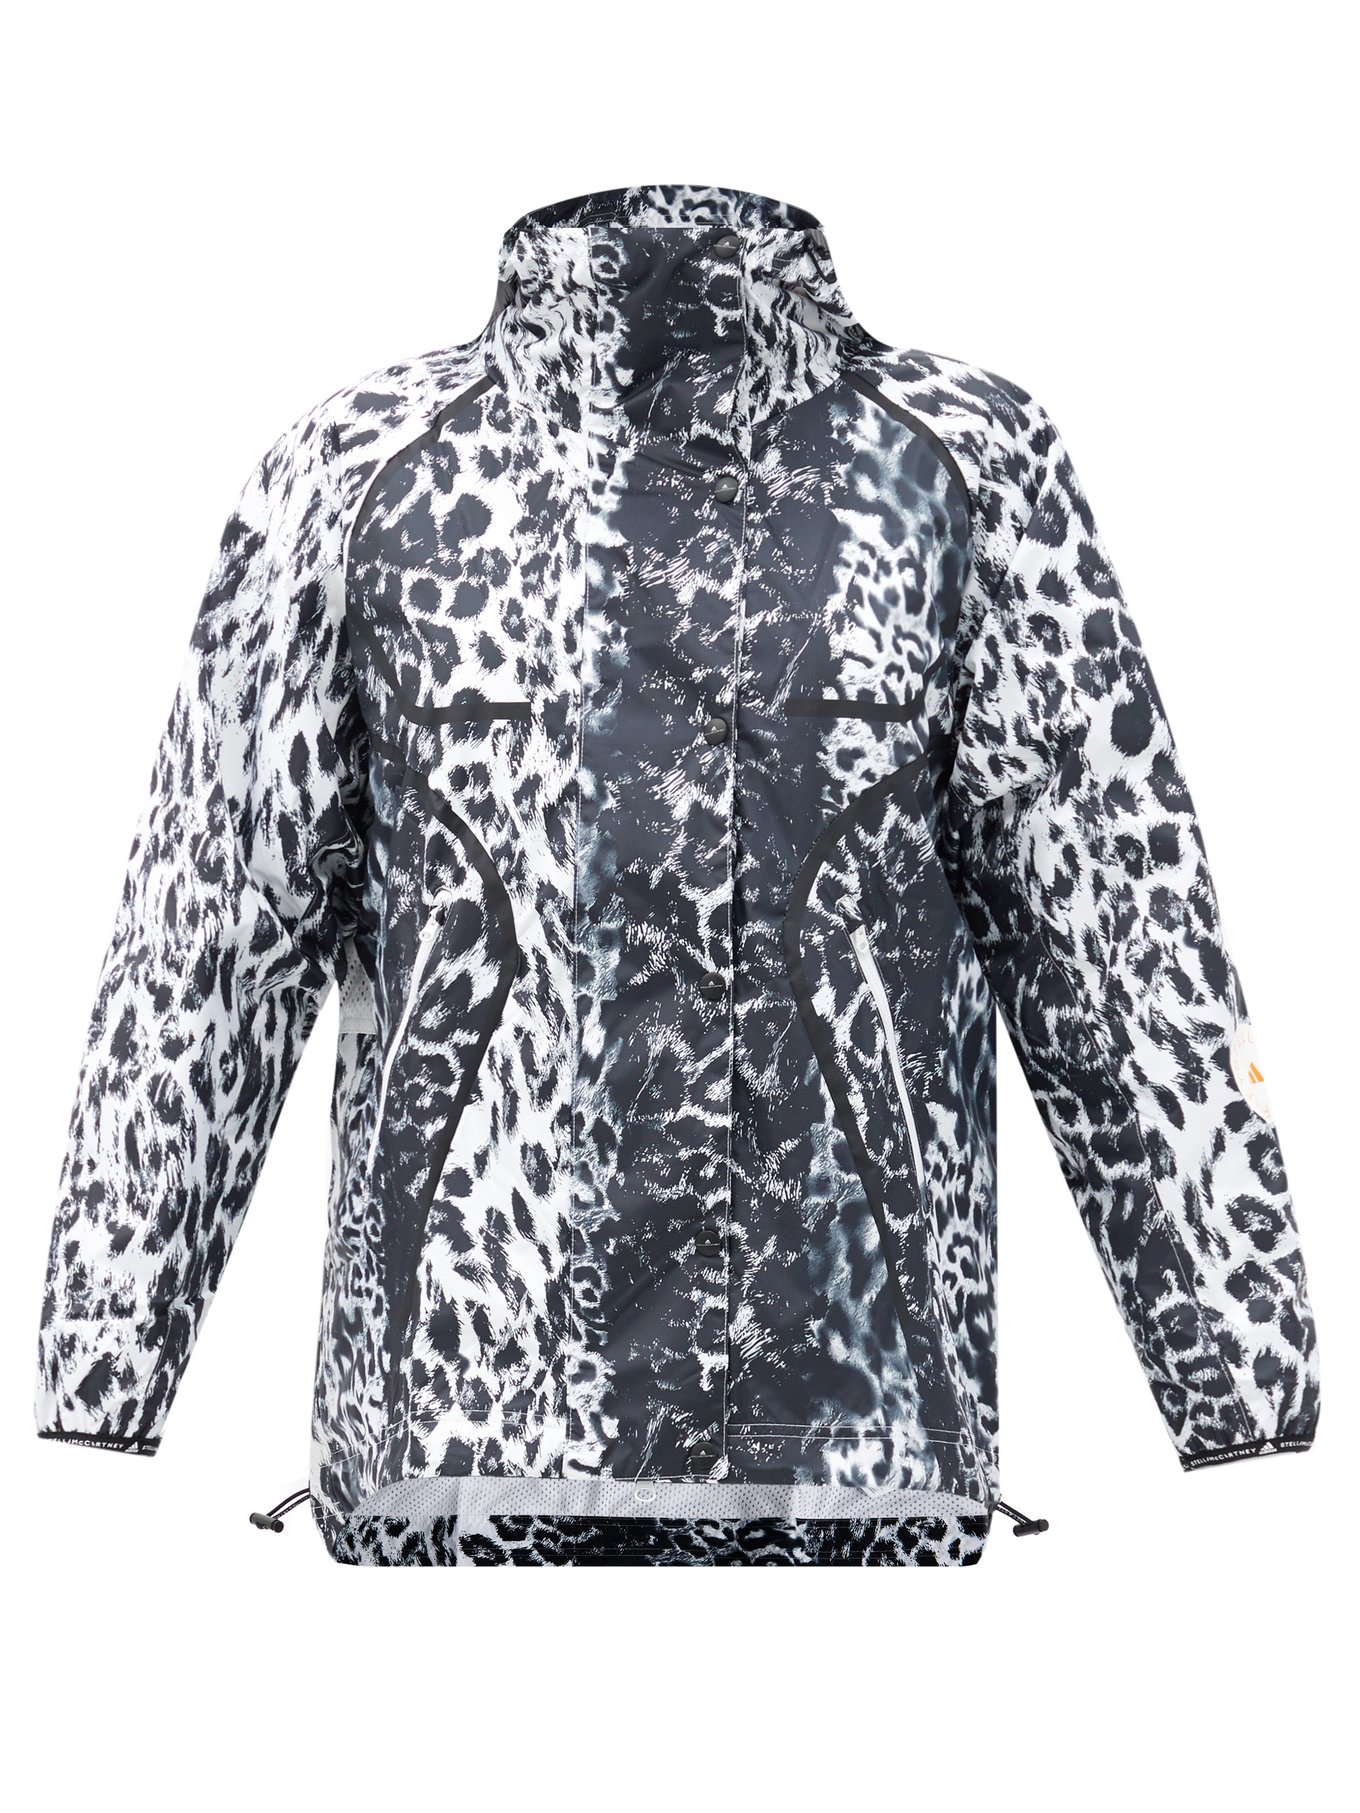 adidas leopard print jacket